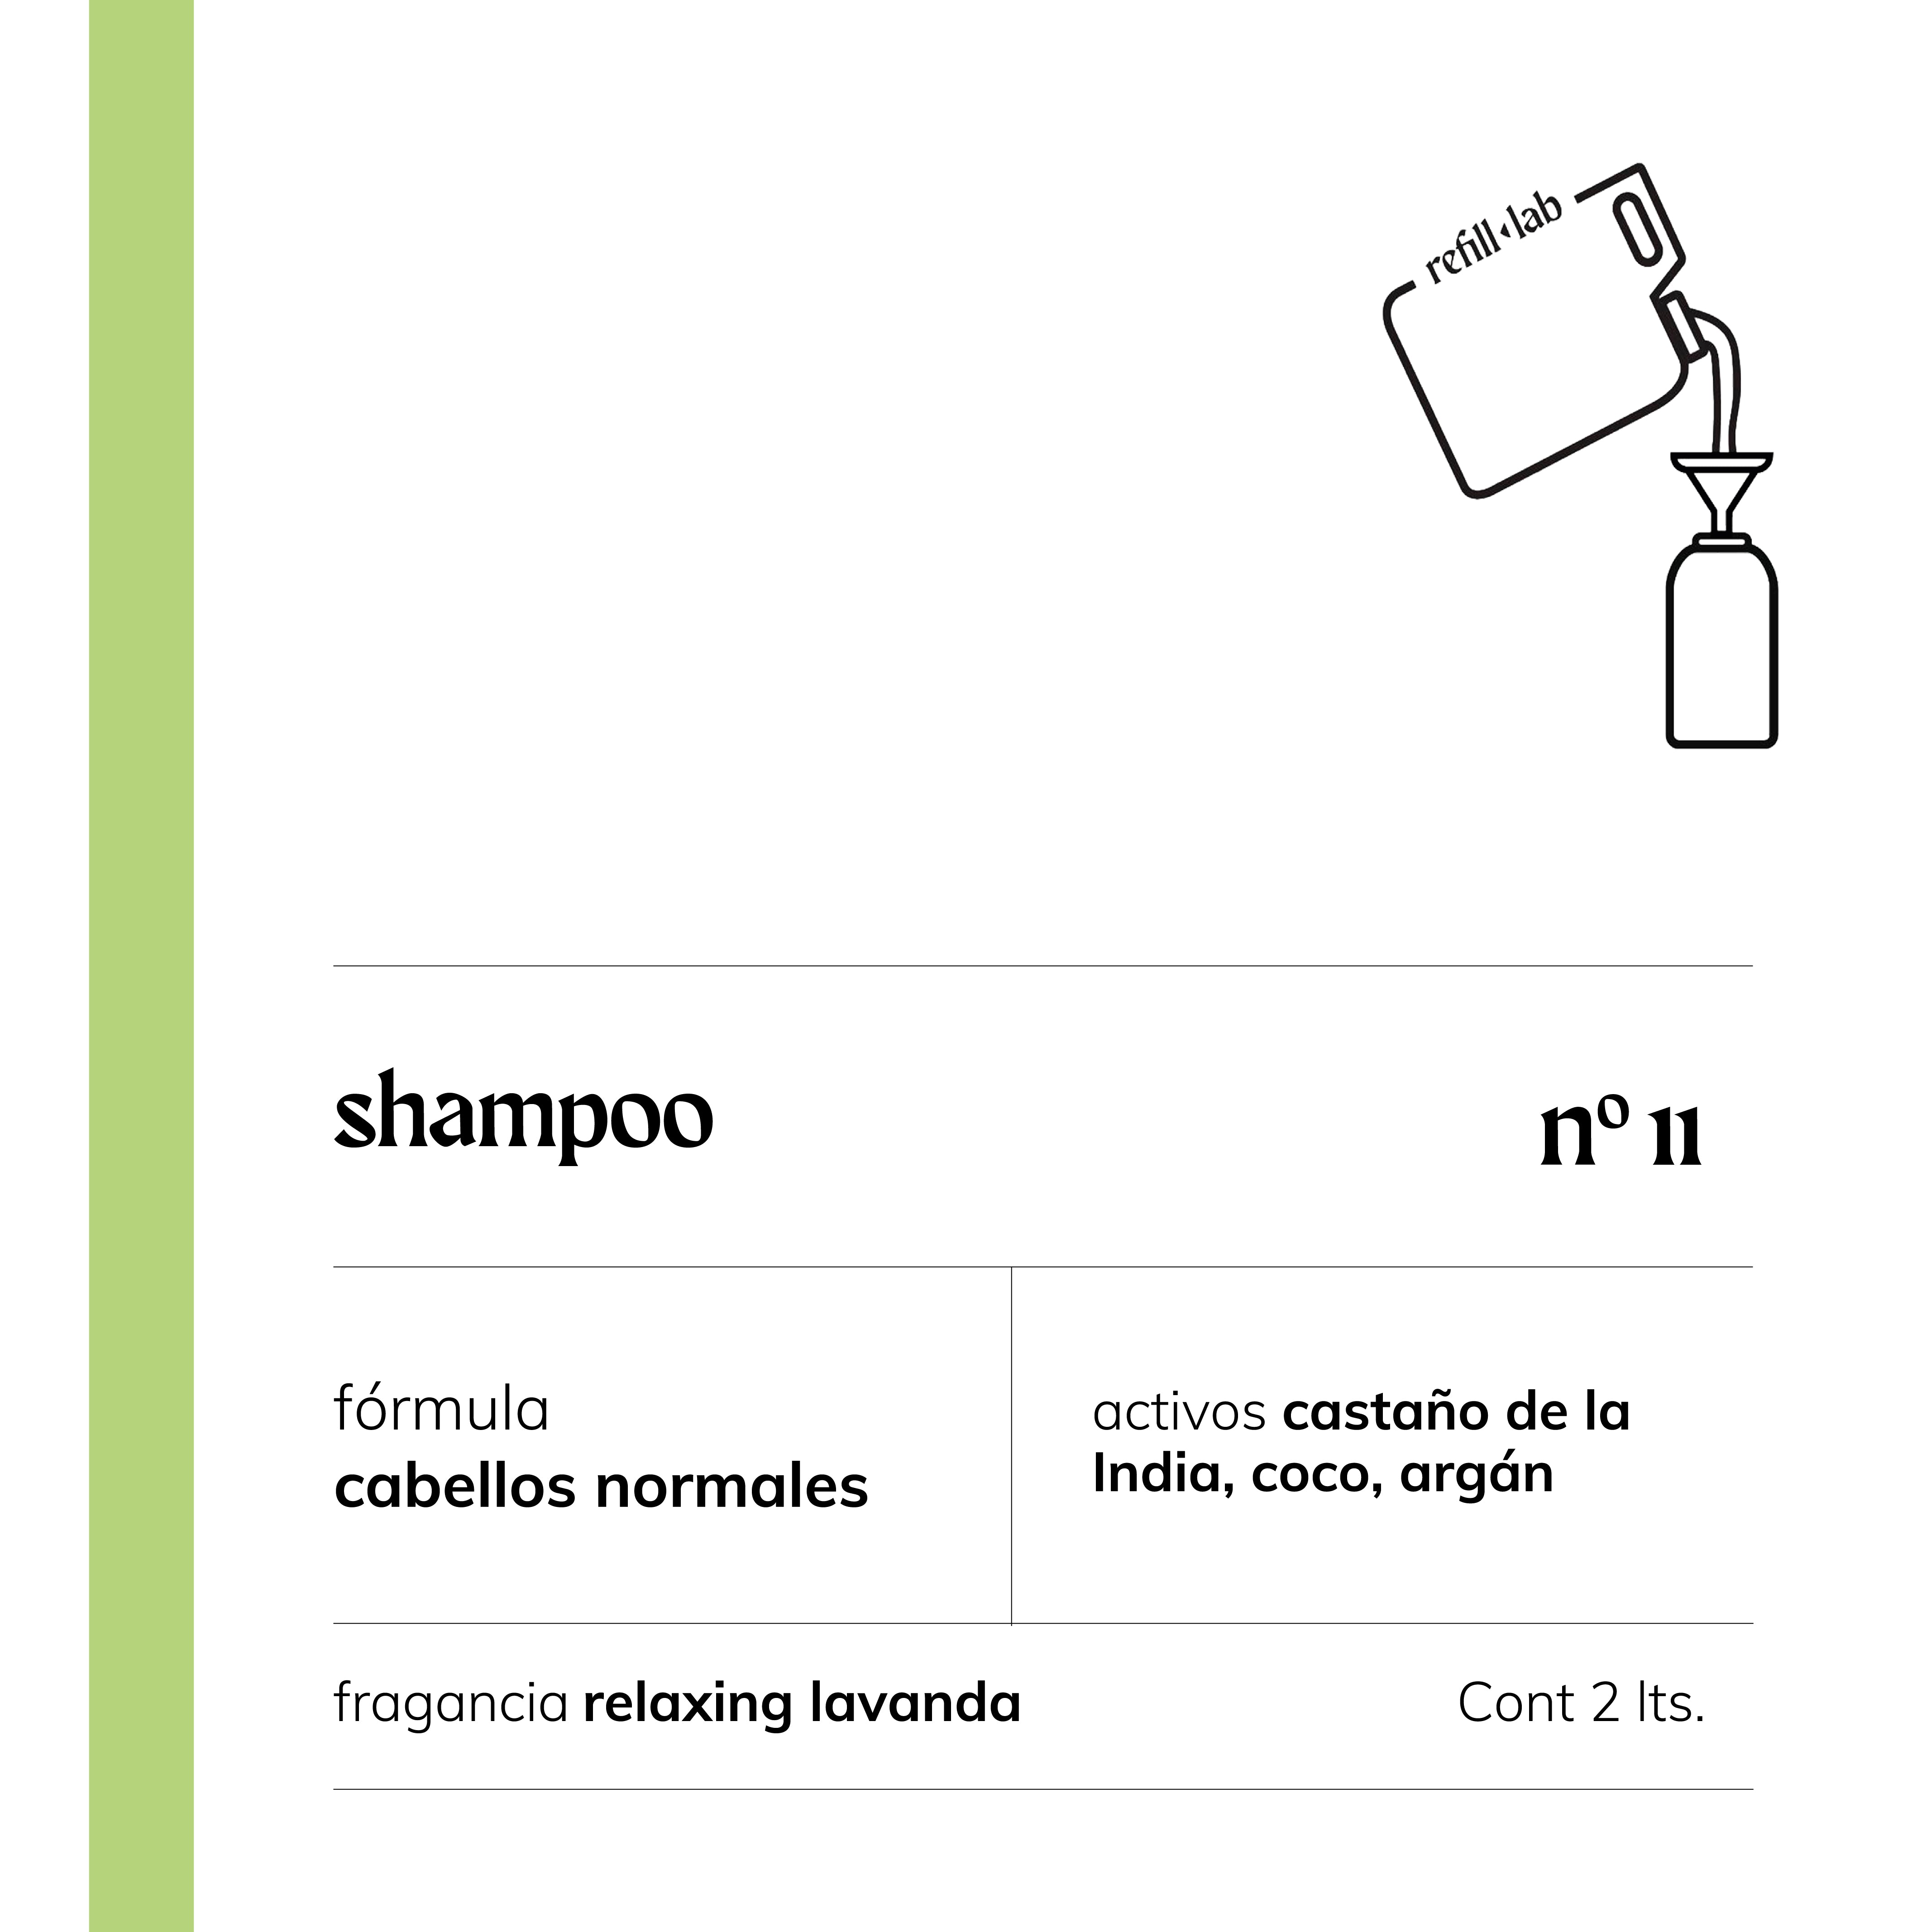 Shampoo sin sulfatos - Cabellos Normales - Relaxing Lavanda - 2 lts.